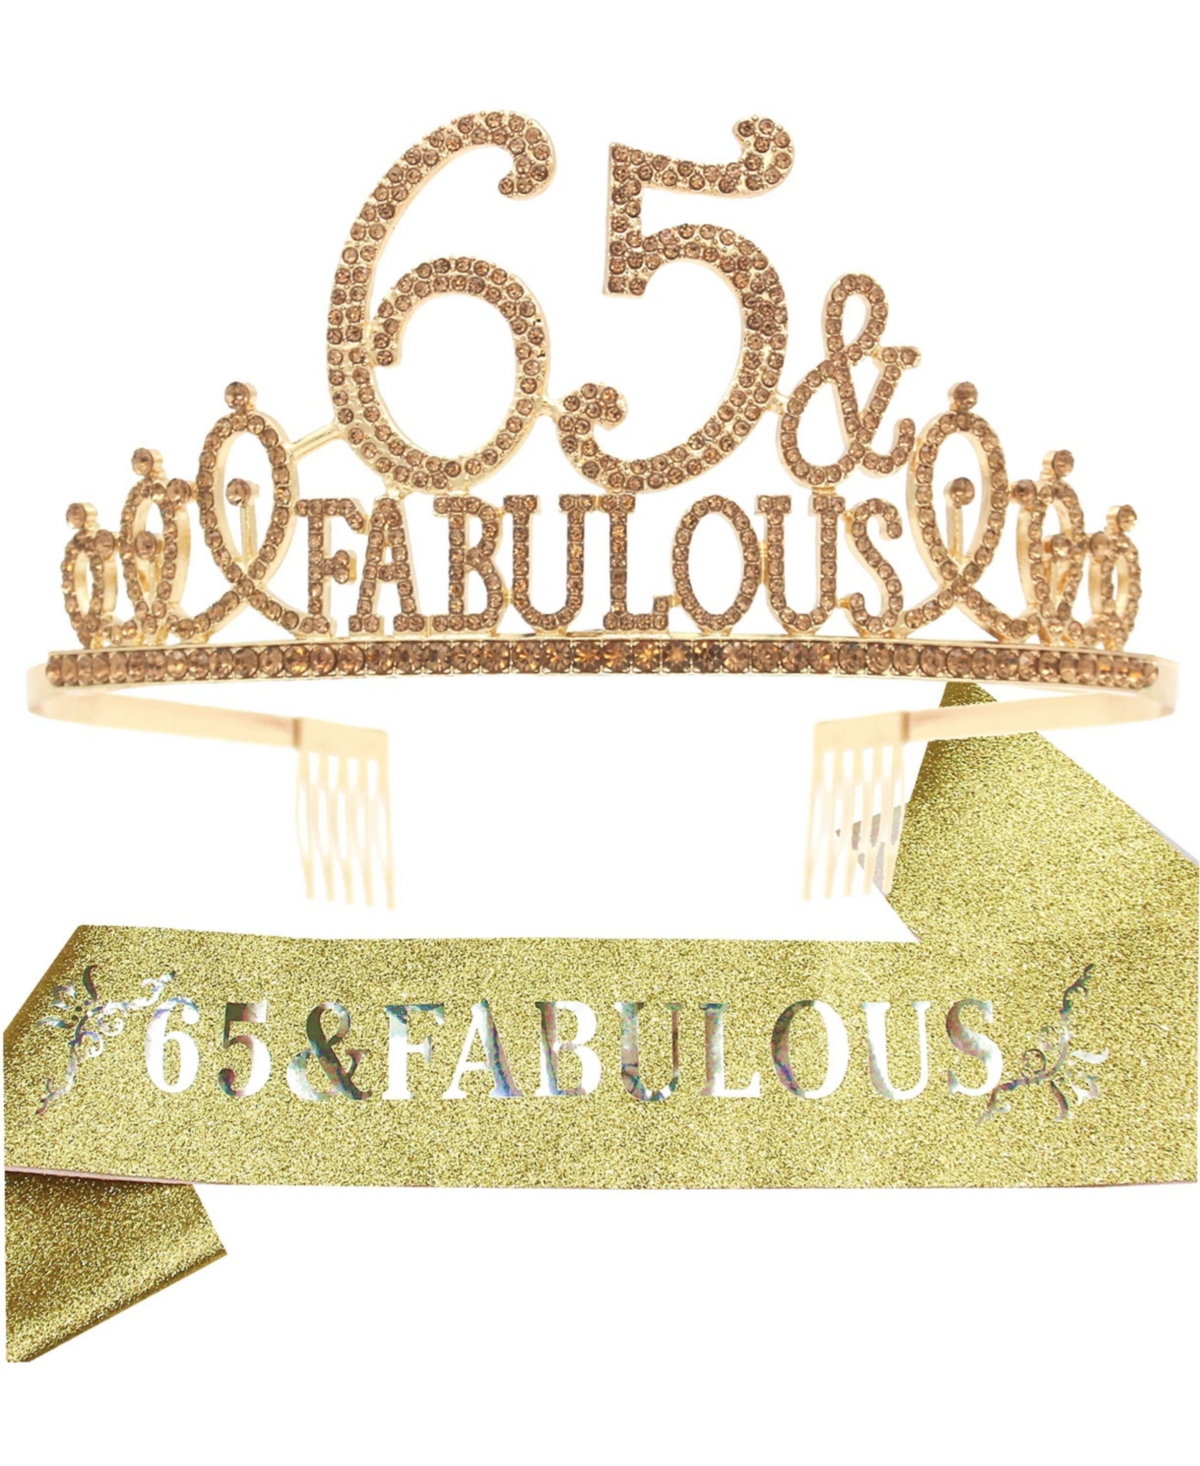 65th Birthday Sash and Tiara for Women - Fabulous Glitter Sash + Fabulous Rhinestone Gold Premium Metal Tiara for Her, 65th Birthday Gifts for 65 Part